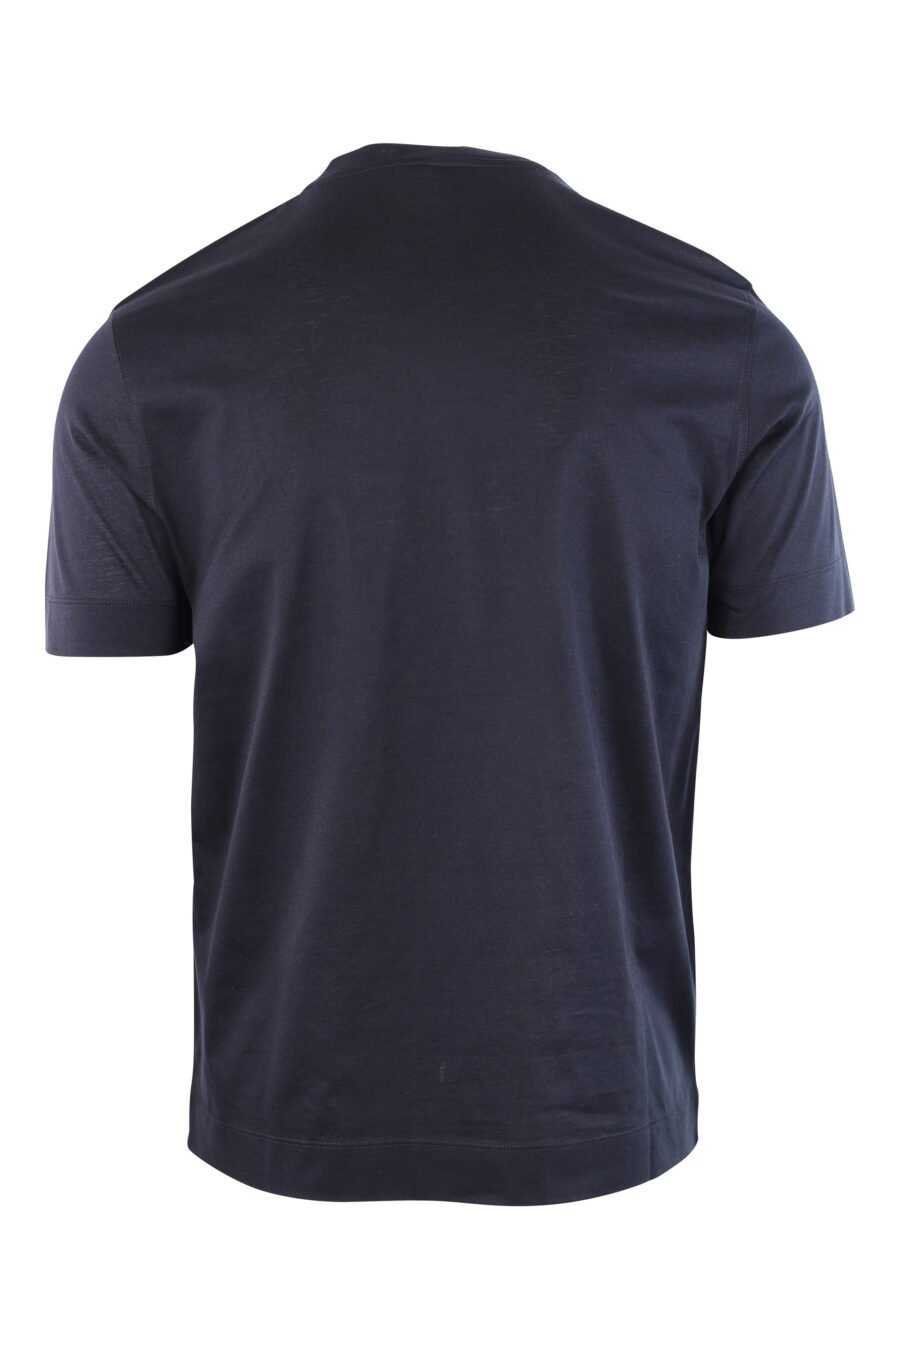 T-shirt bleu foncé avec logo brodé - IMG 3782